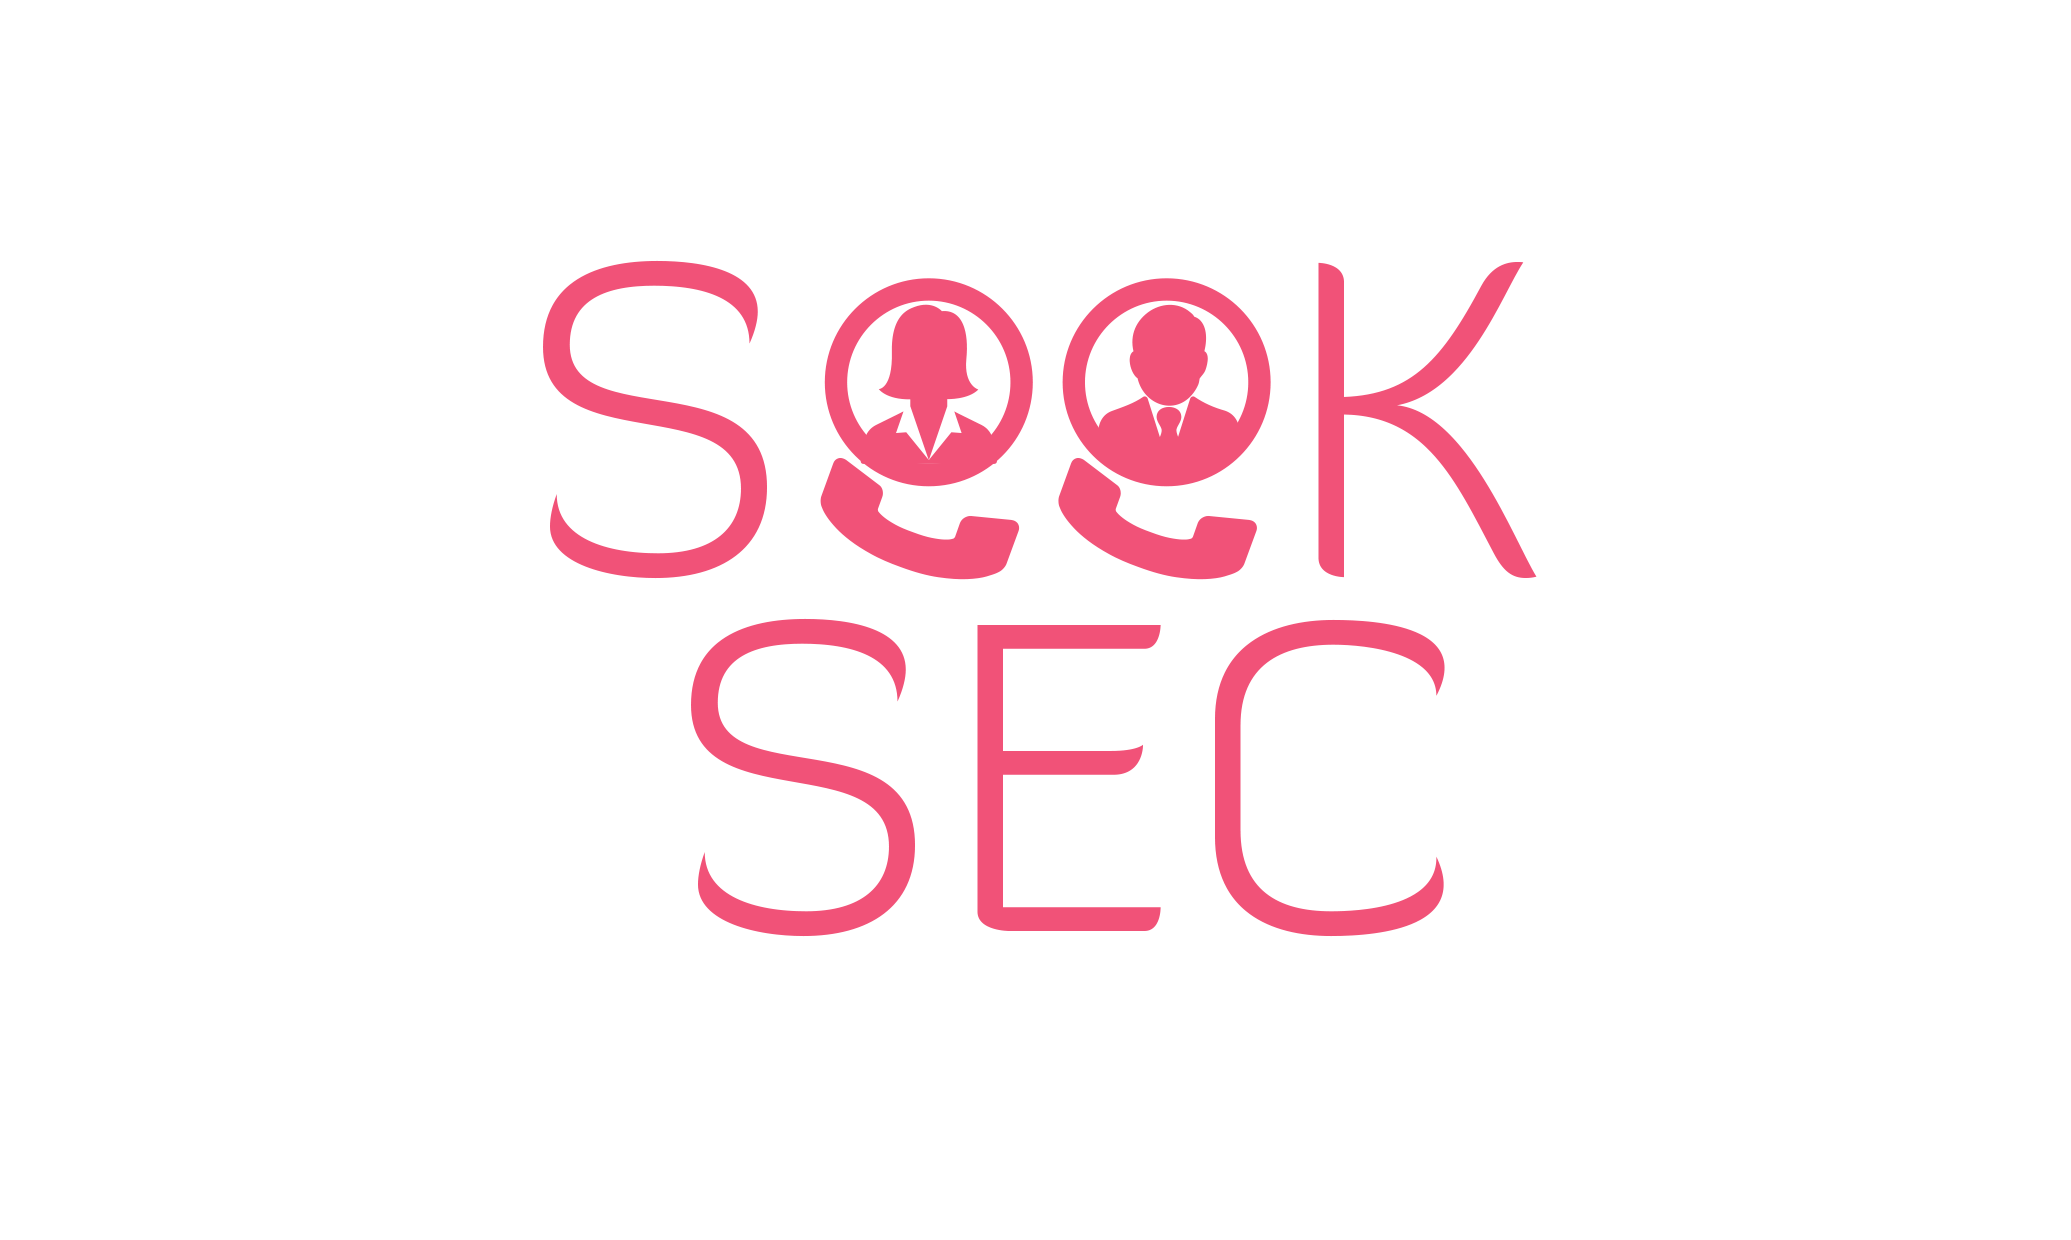 SeekSec-Logo